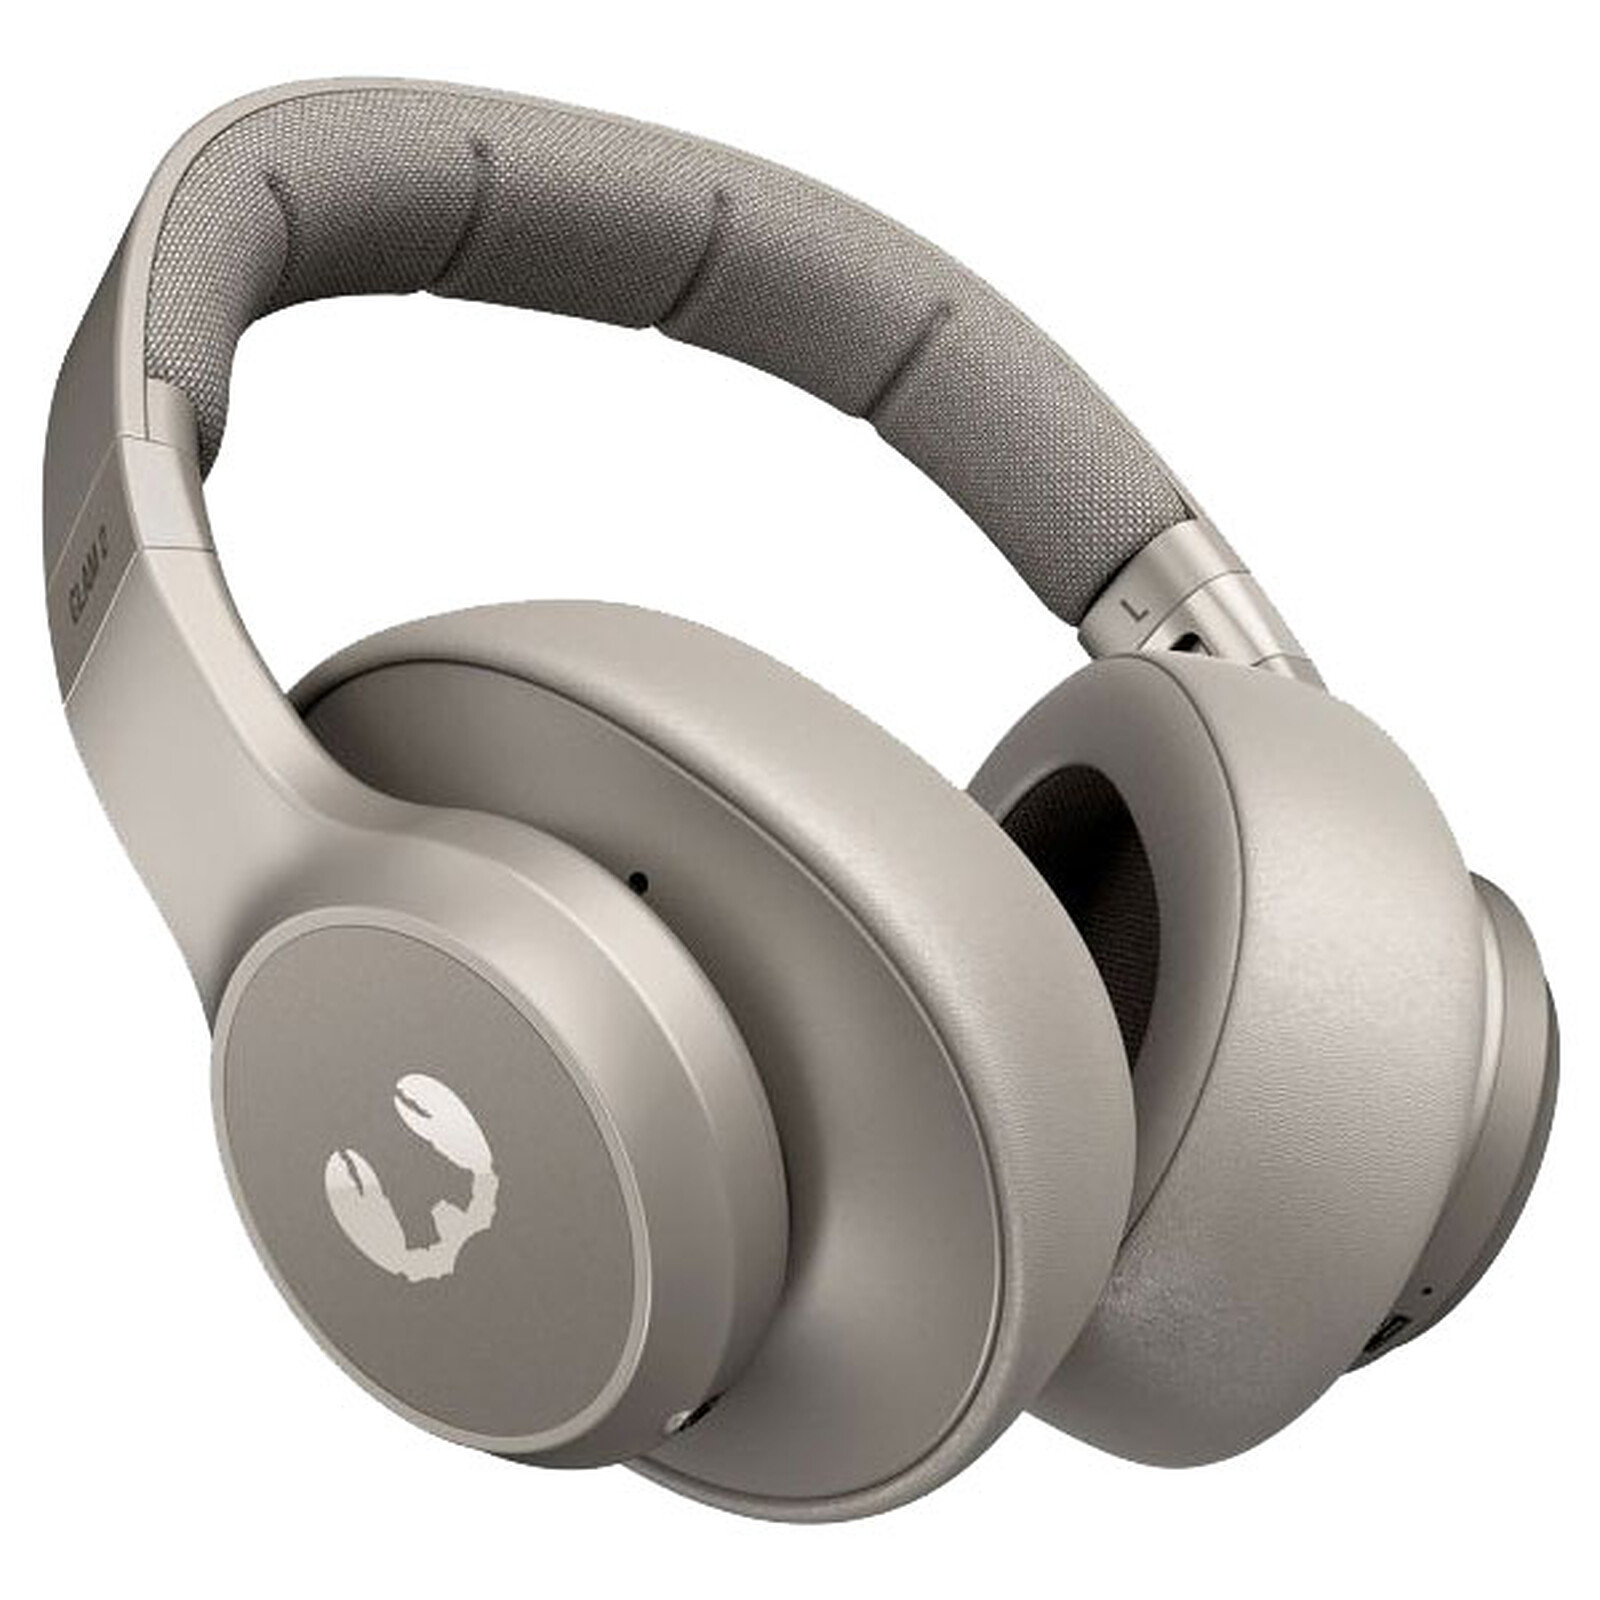 Silky Headphones - Clam LDLC 3-year Sand - Fresh\'n Rebel 2 warranty